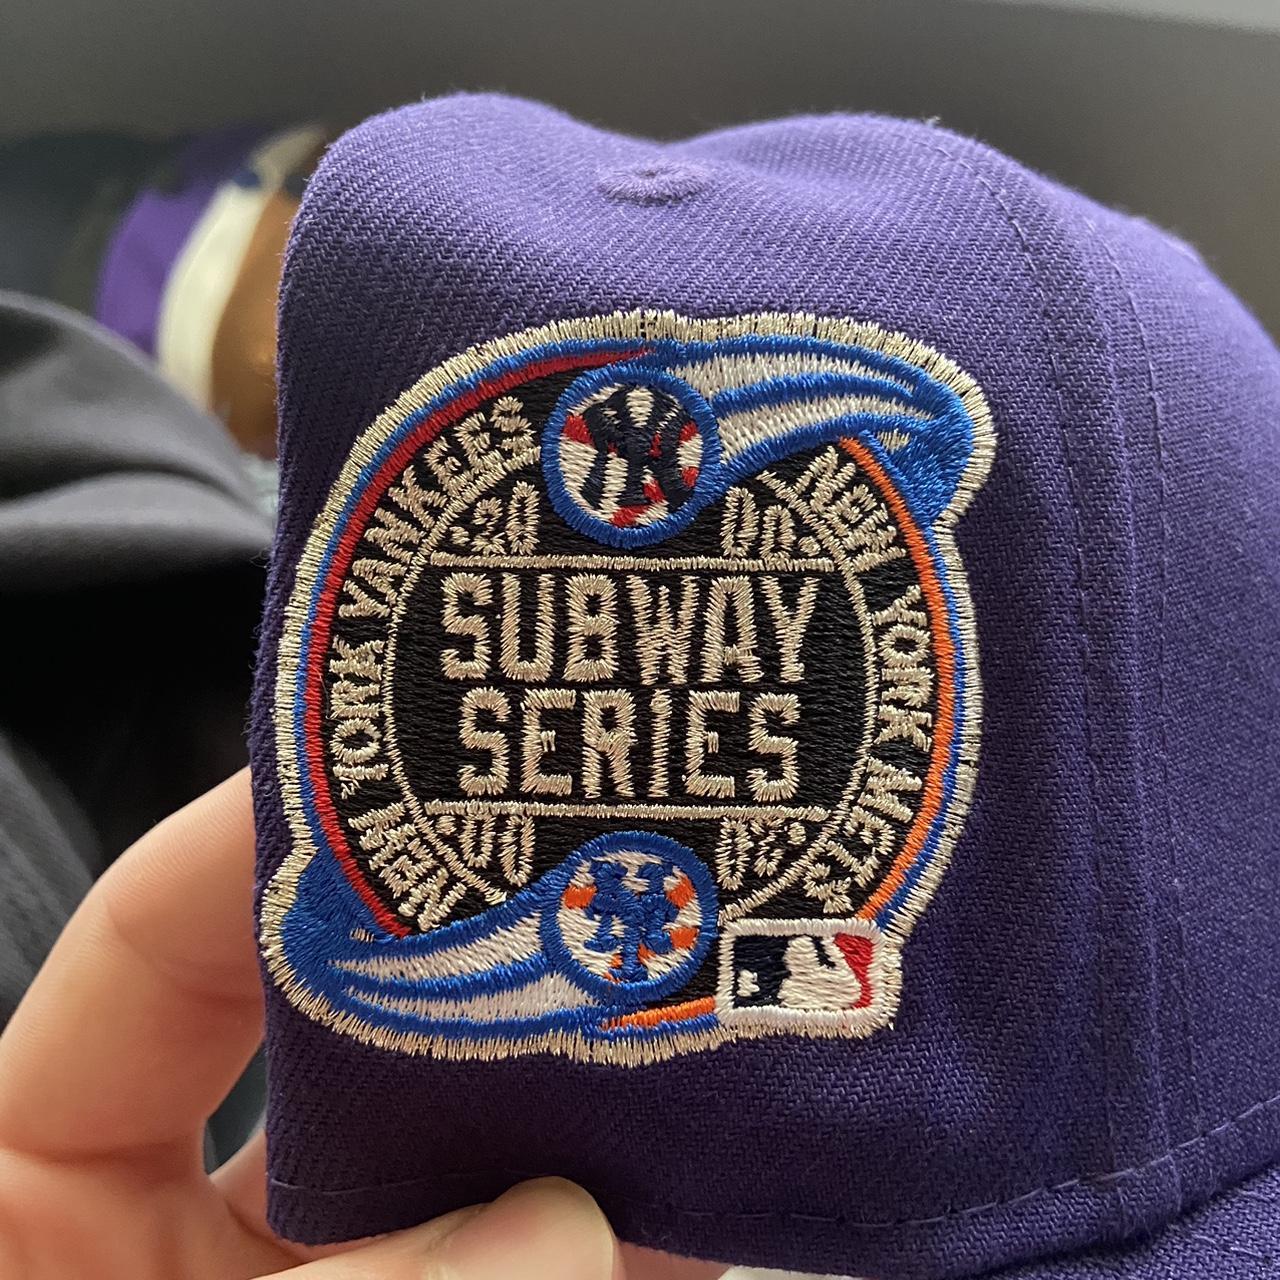 New York Yankees fitted hat pink UV Subway series - Depop